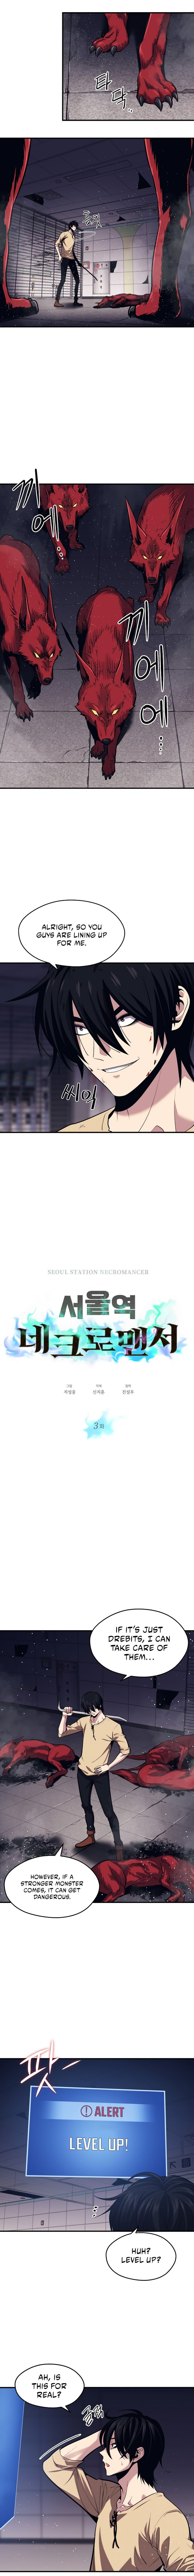 seoul-station-necromancer-chap-3-1